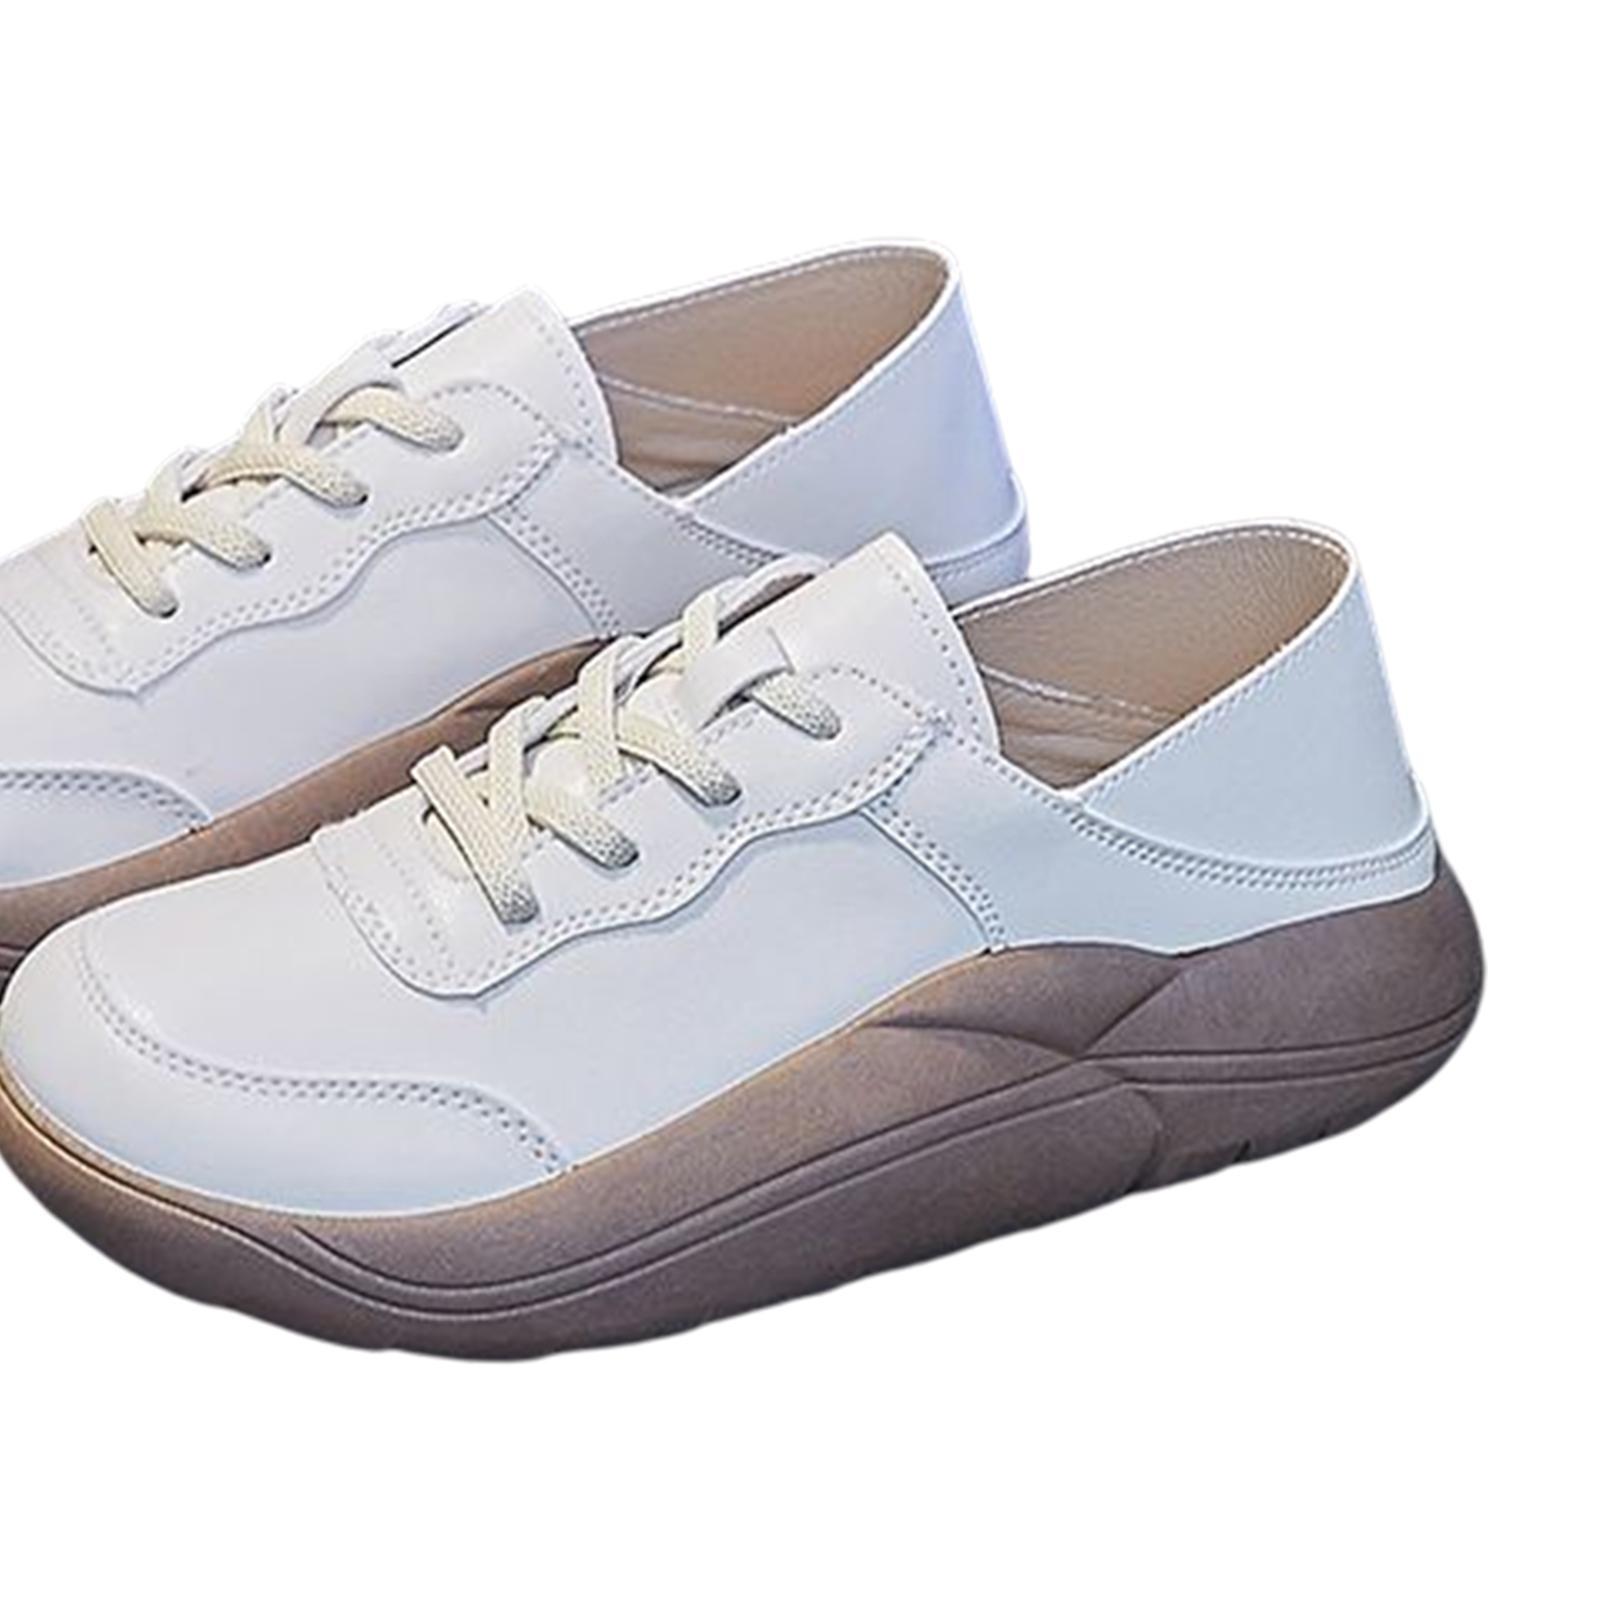 Women's Slip on Walking Shoes Lightweight Casual Running Sneakers